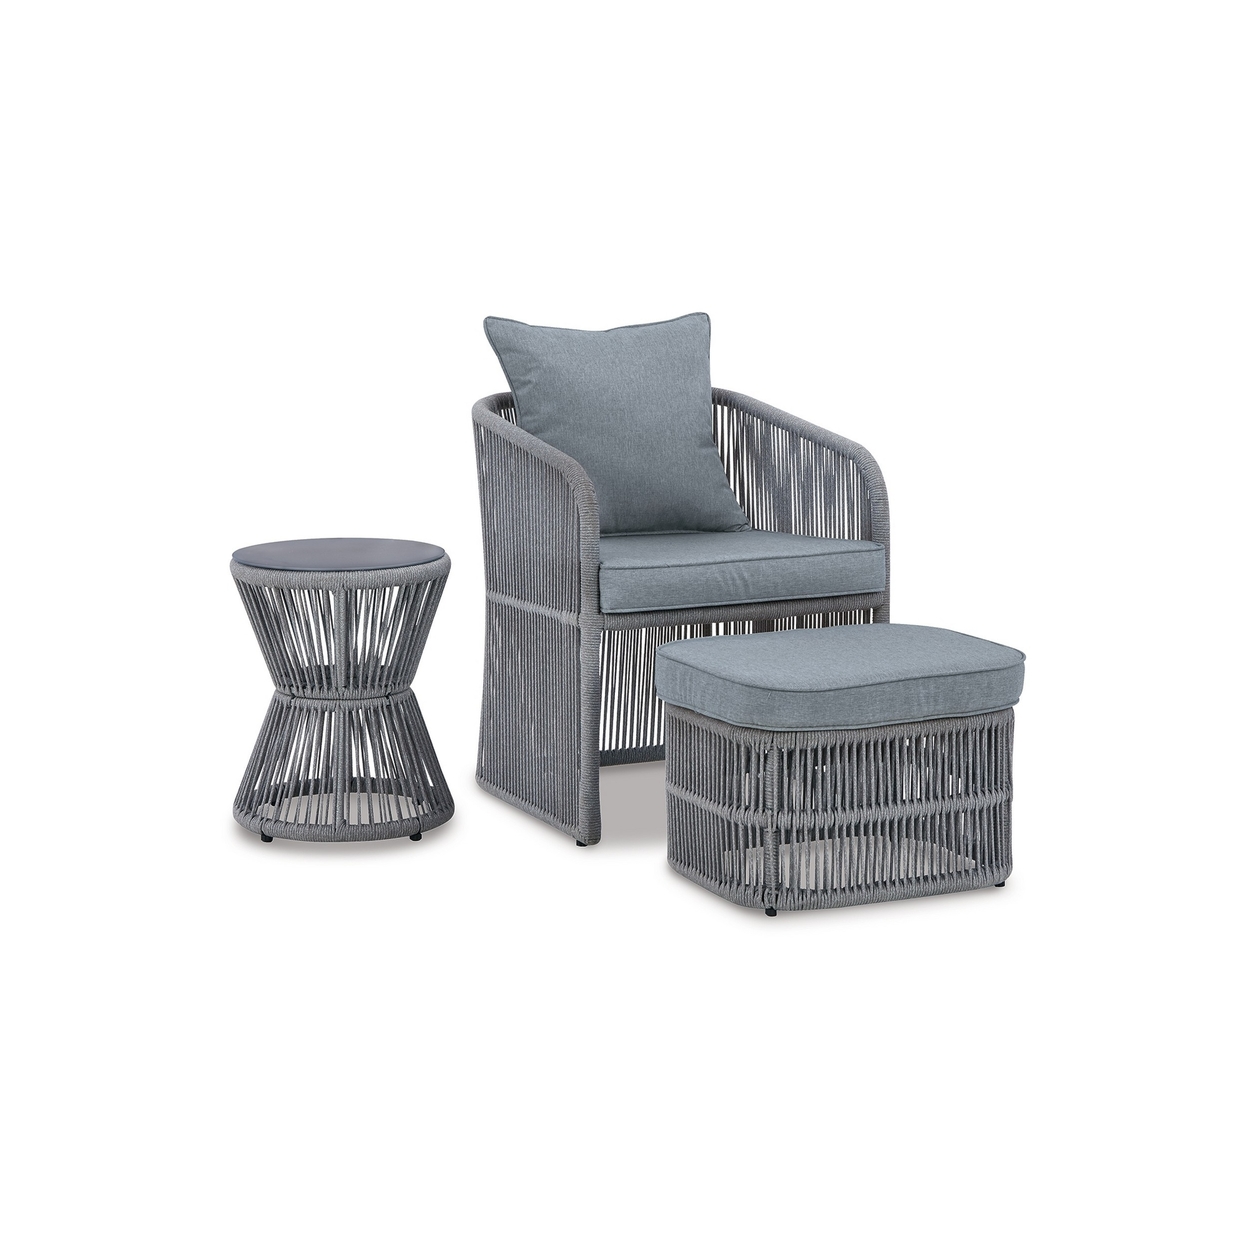 3 Piece Outdoor Chair, Ottoman, Side Table Set, Rope, Steel Frame, Gray - Saltoro Sherpi